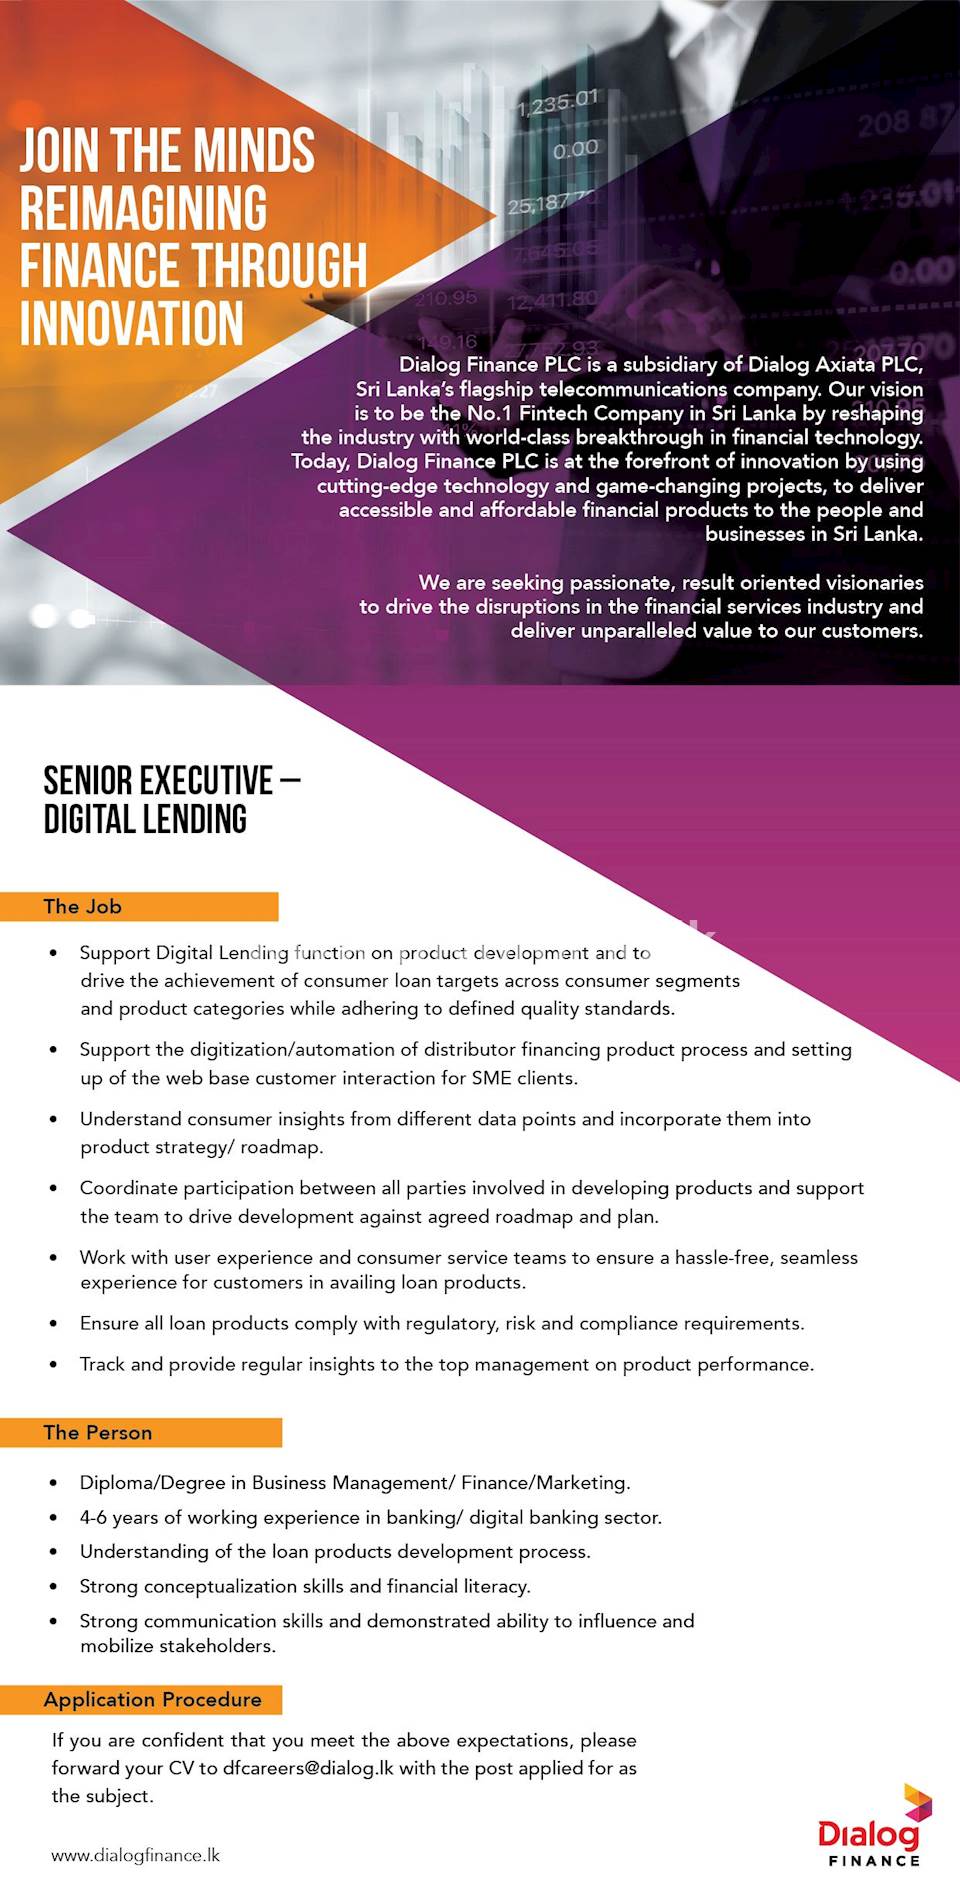 Senior Executive - Digital Lending